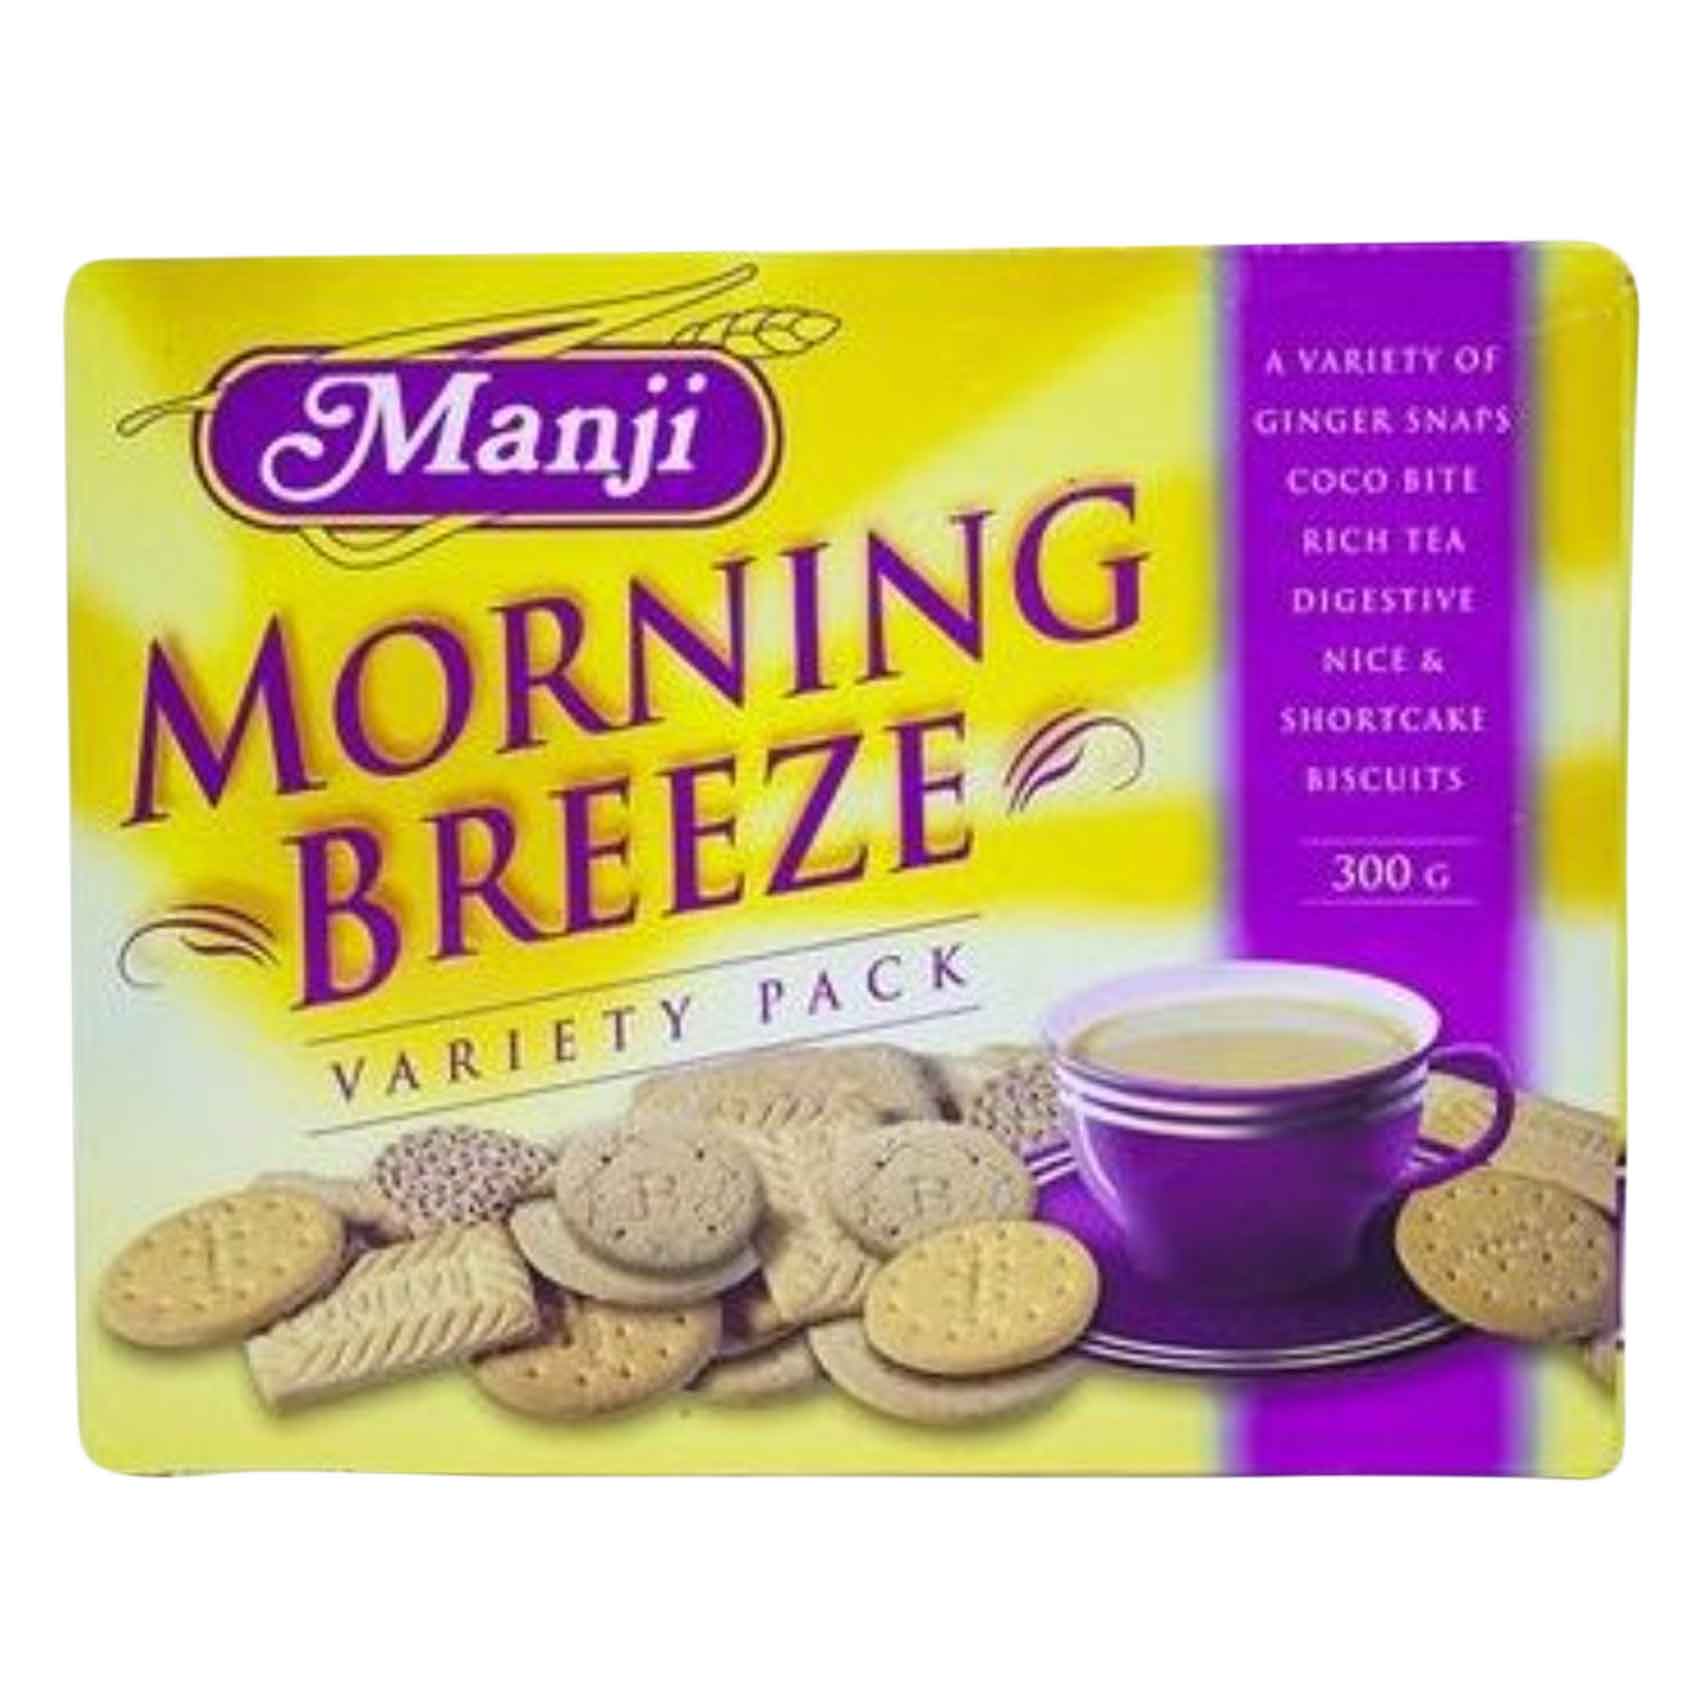 Manji Morning Breeze Biscuits 300g